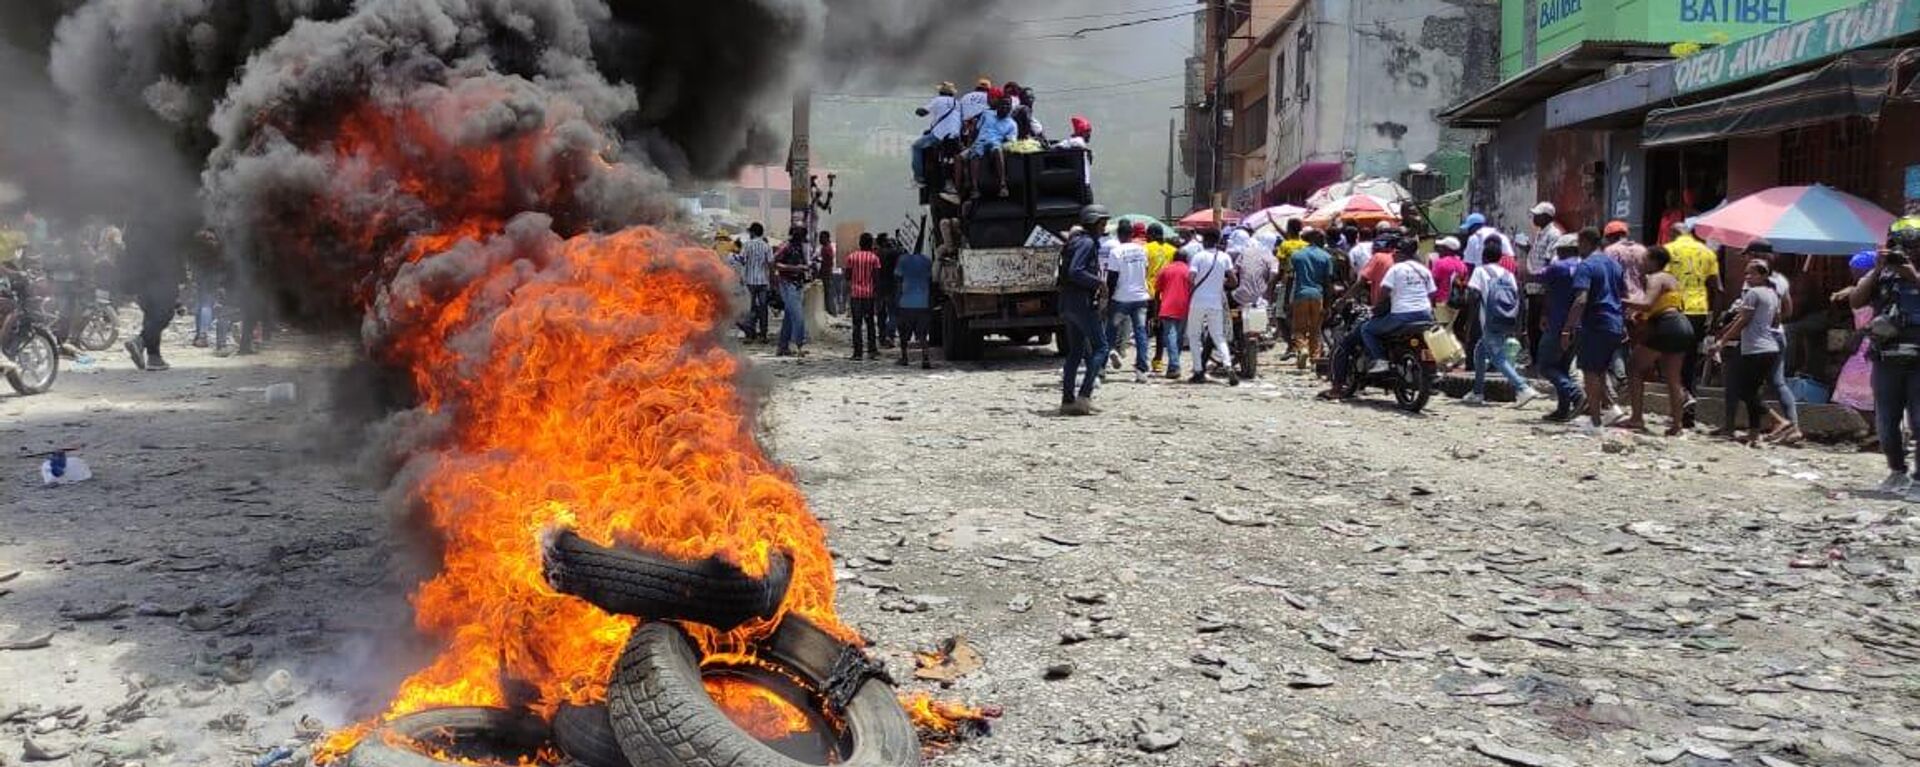 Manifestantes en Haití reclamando justicia por el expresidente asesinado Jovenel Moise  - Sputnik Mundo, 1920, 08.08.2022